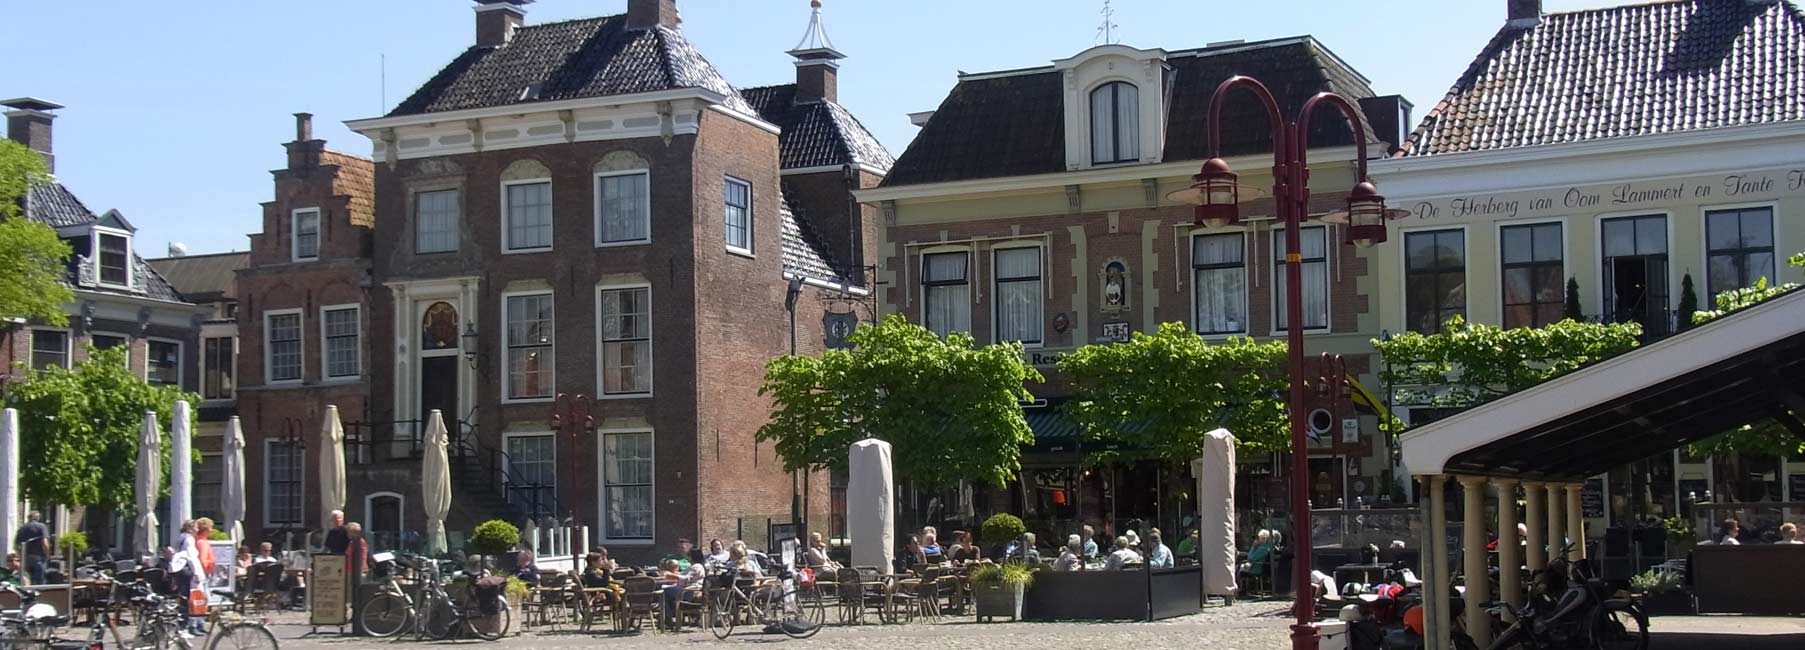 Mooiste marktplein in Friesland